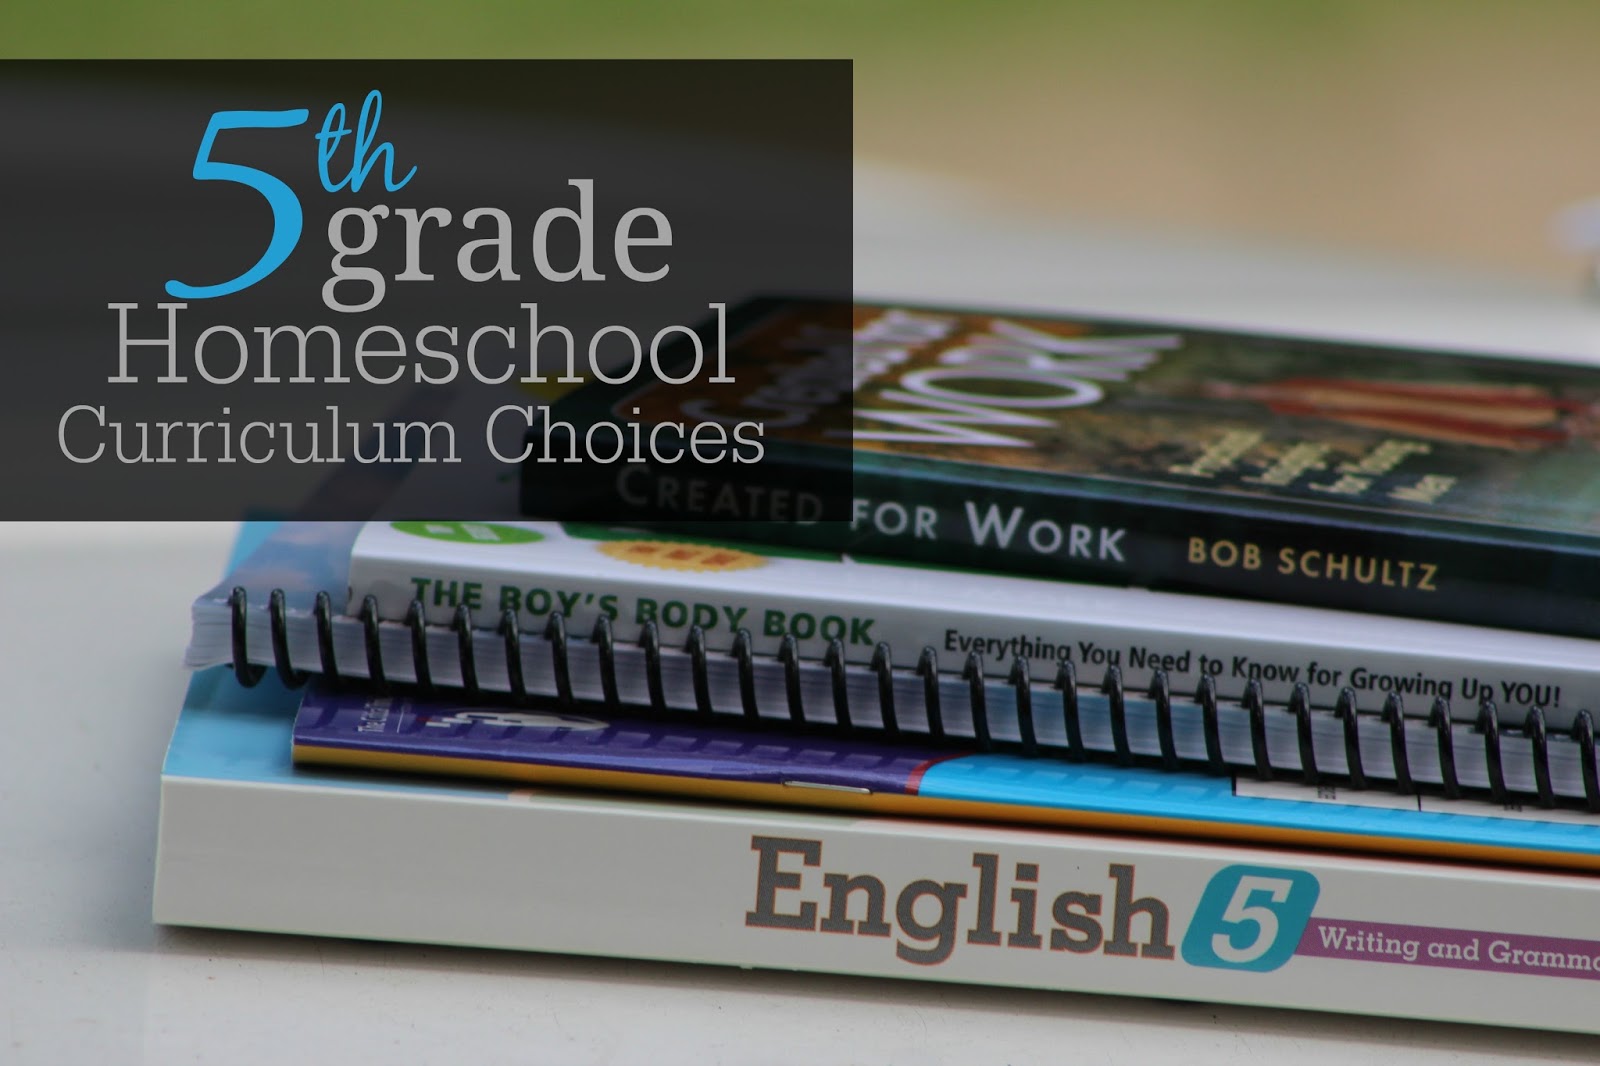 The Unlikely Homeschool 5th Grade Homeschool Curriculum Choices